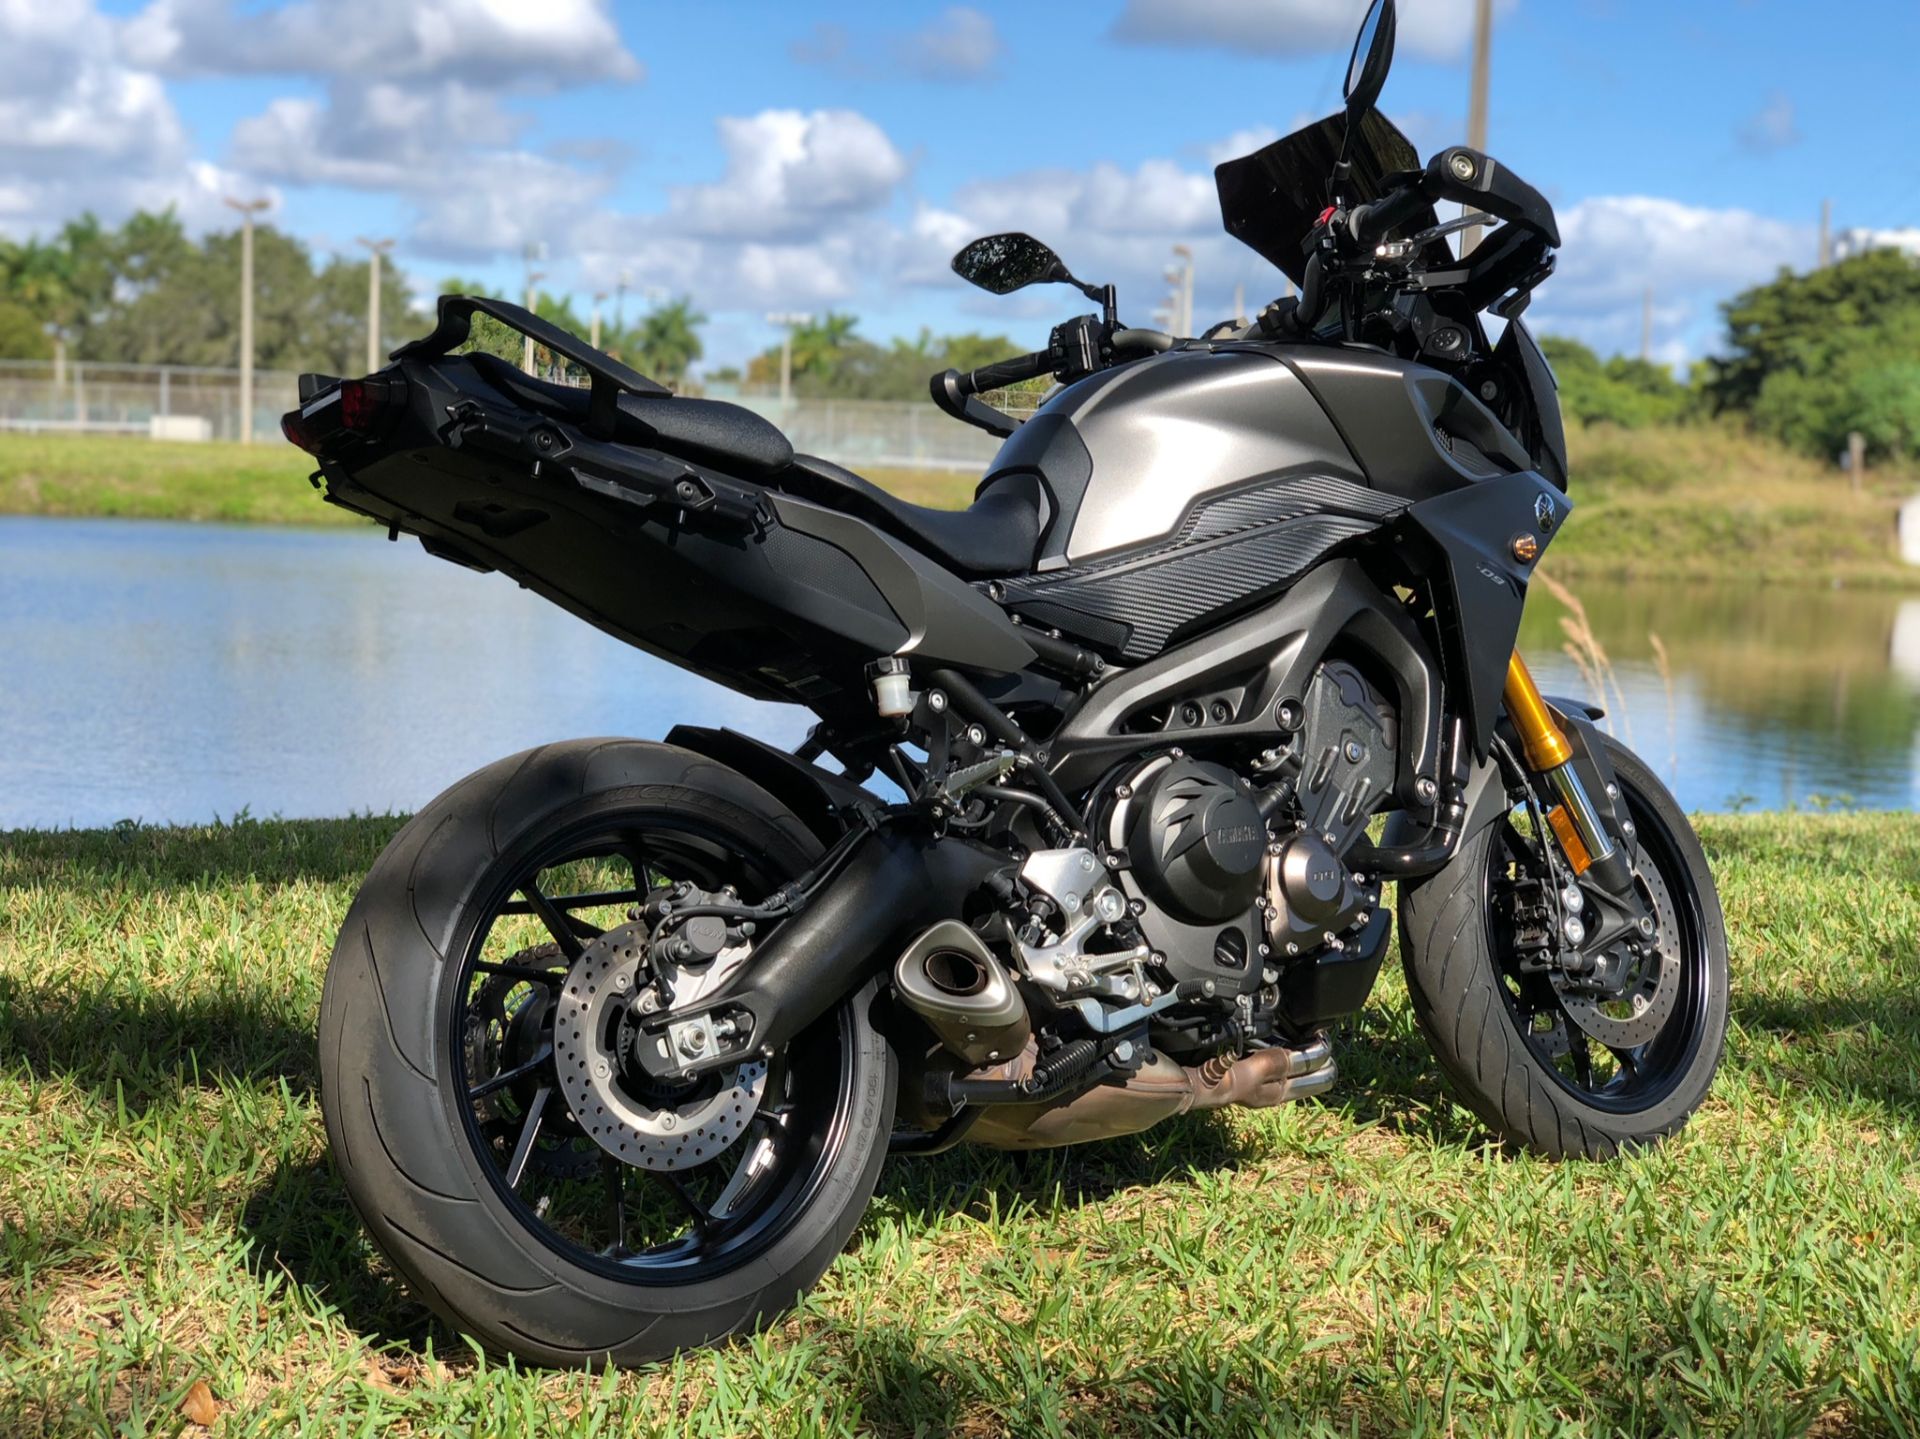 2015 Yamaha FJ-09 in North Miami Beach, Florida - Photo 4